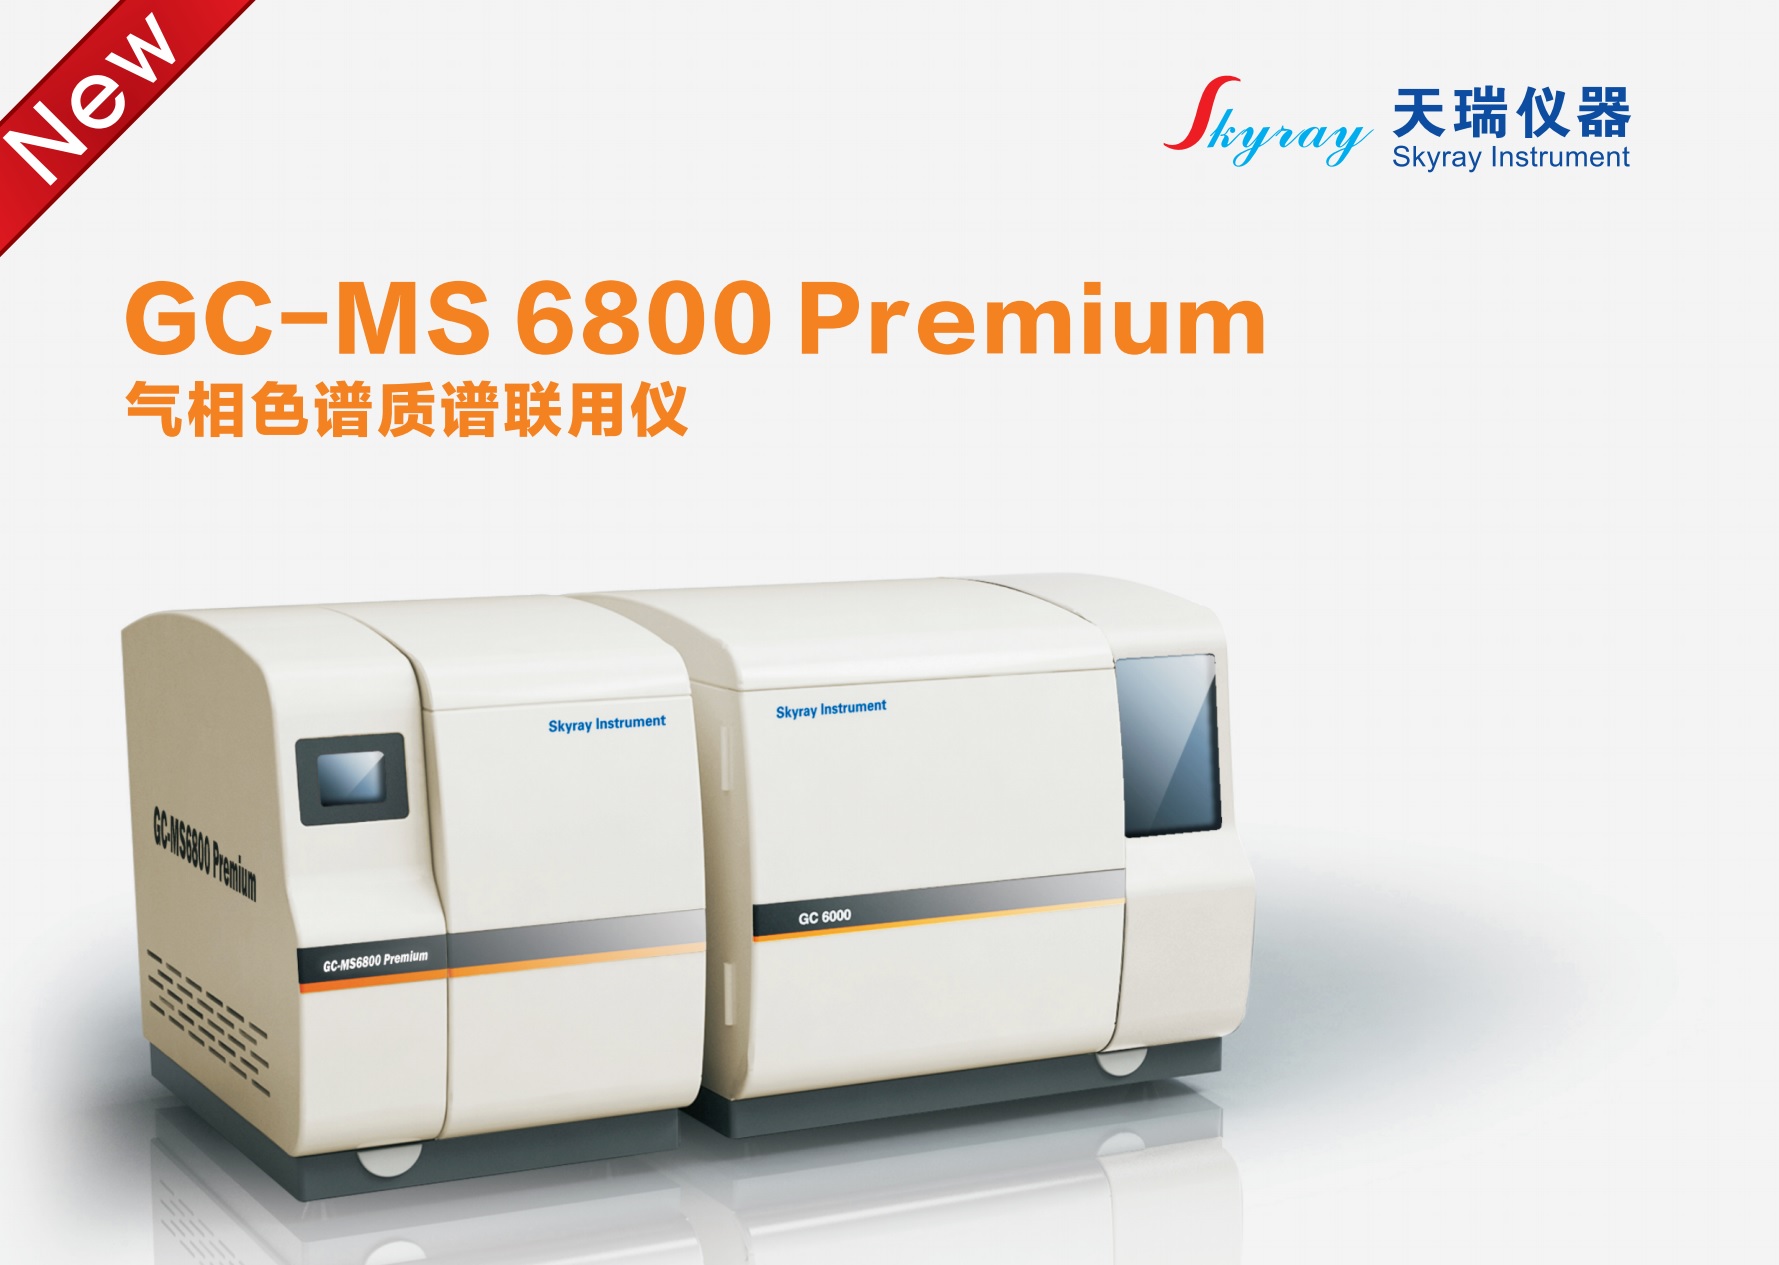 Jiangsu Skyray Instrument Co., Ltd.-GC-MS 6800 P New type